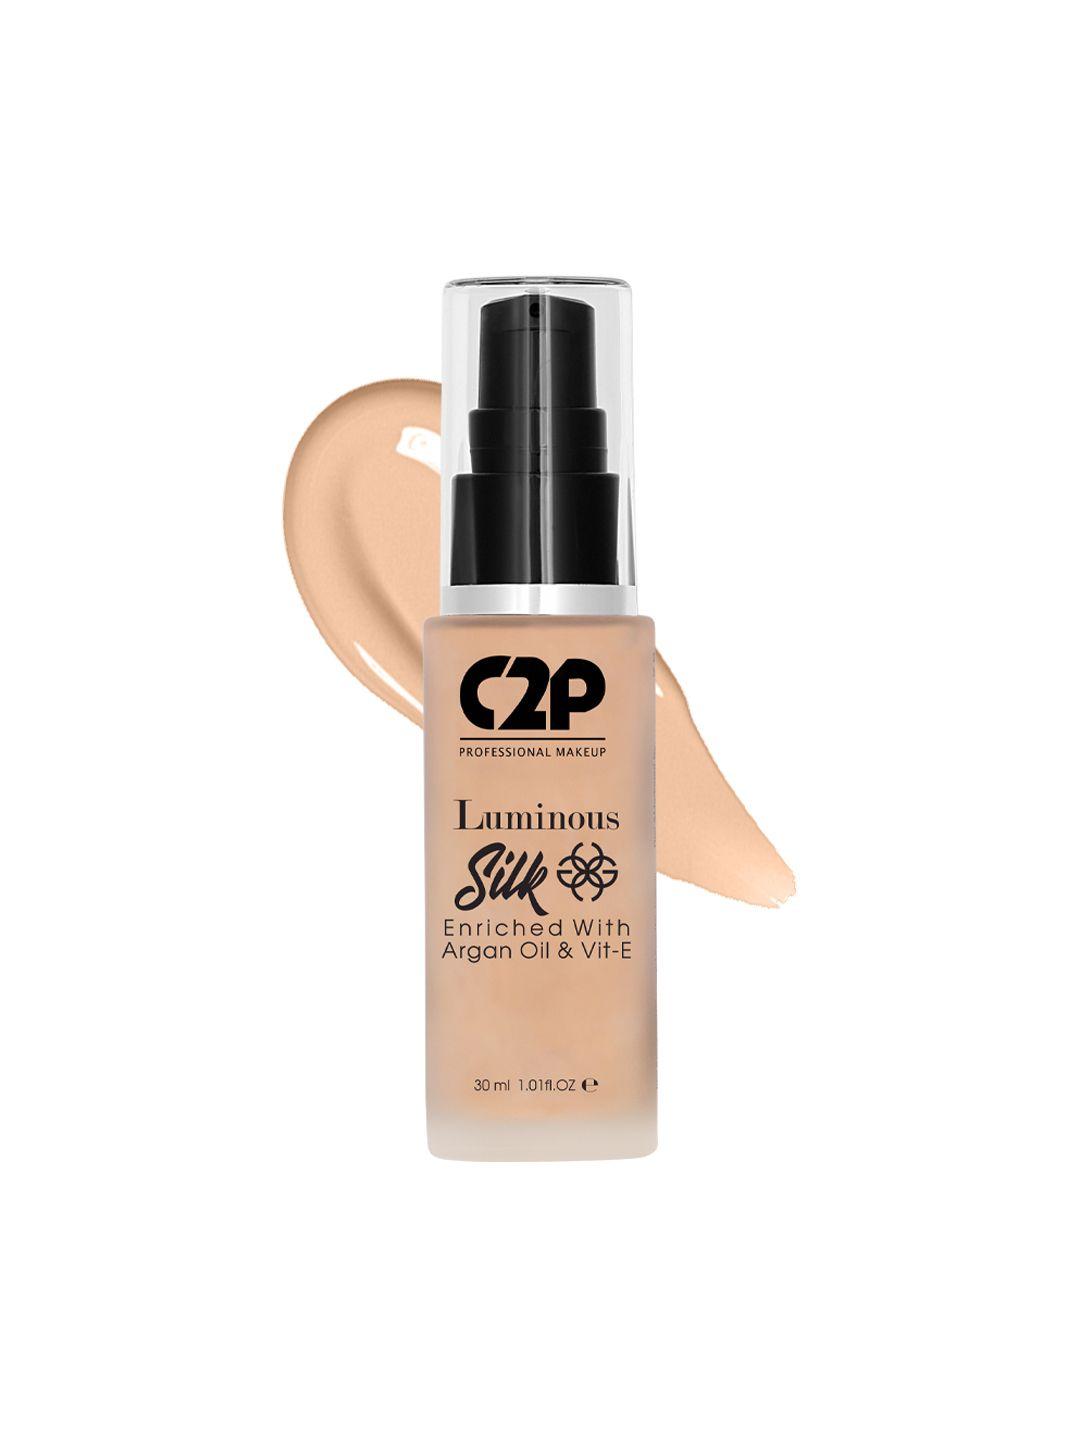 c2p professional makeup luminous silk liquid foundation with argan oil - light 04